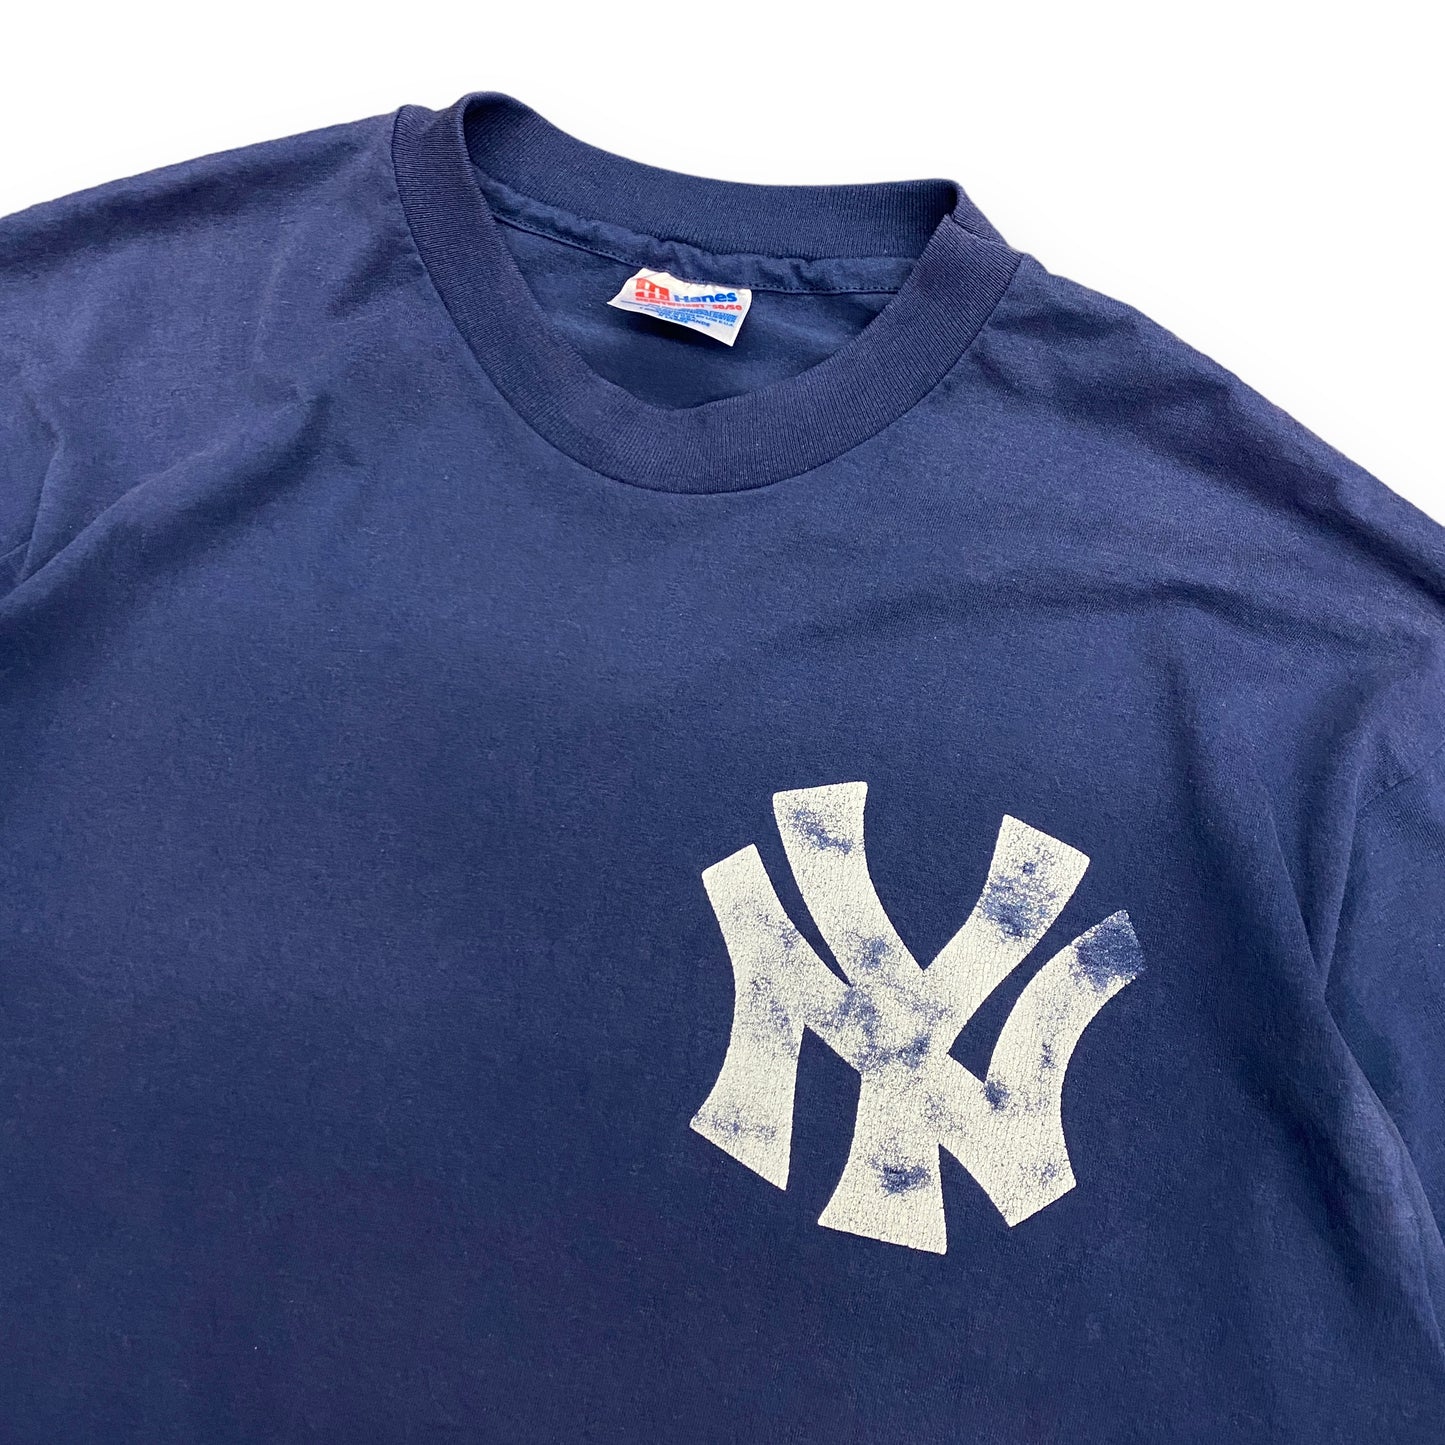 1990s Mickey Mantle New York Yankees Single Stitch Tee - Size XL